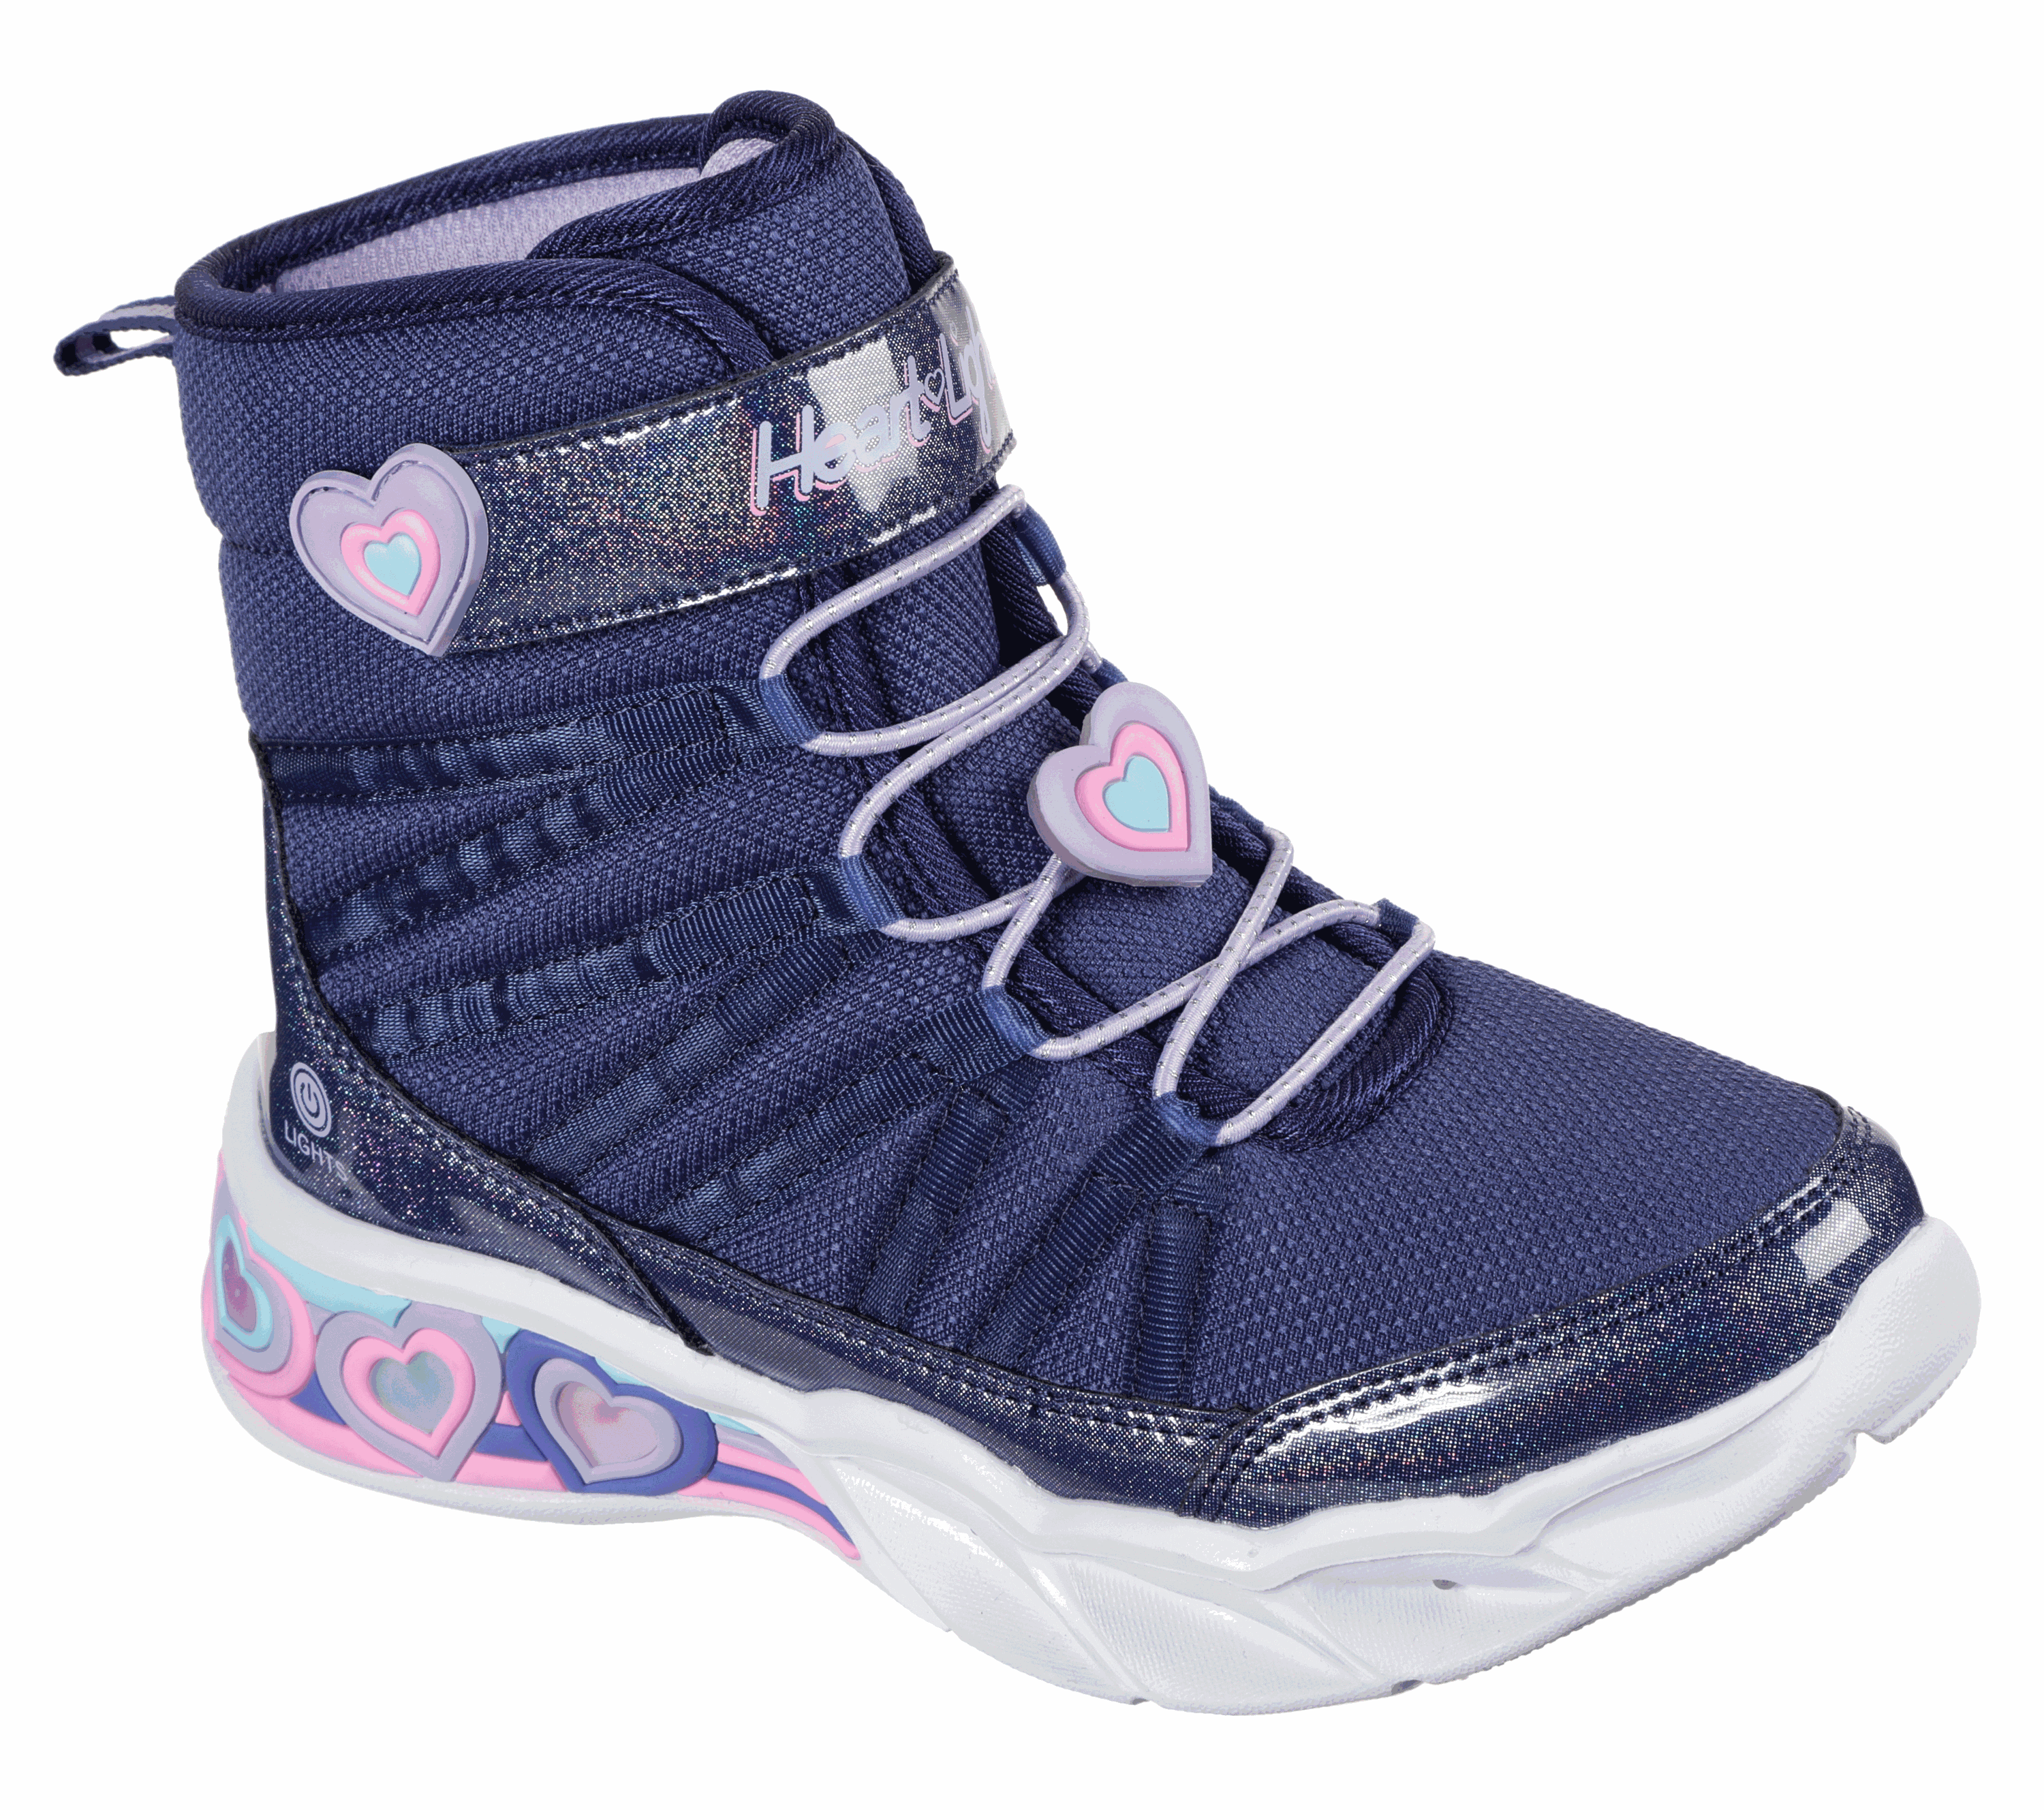 skechers girls snow boots